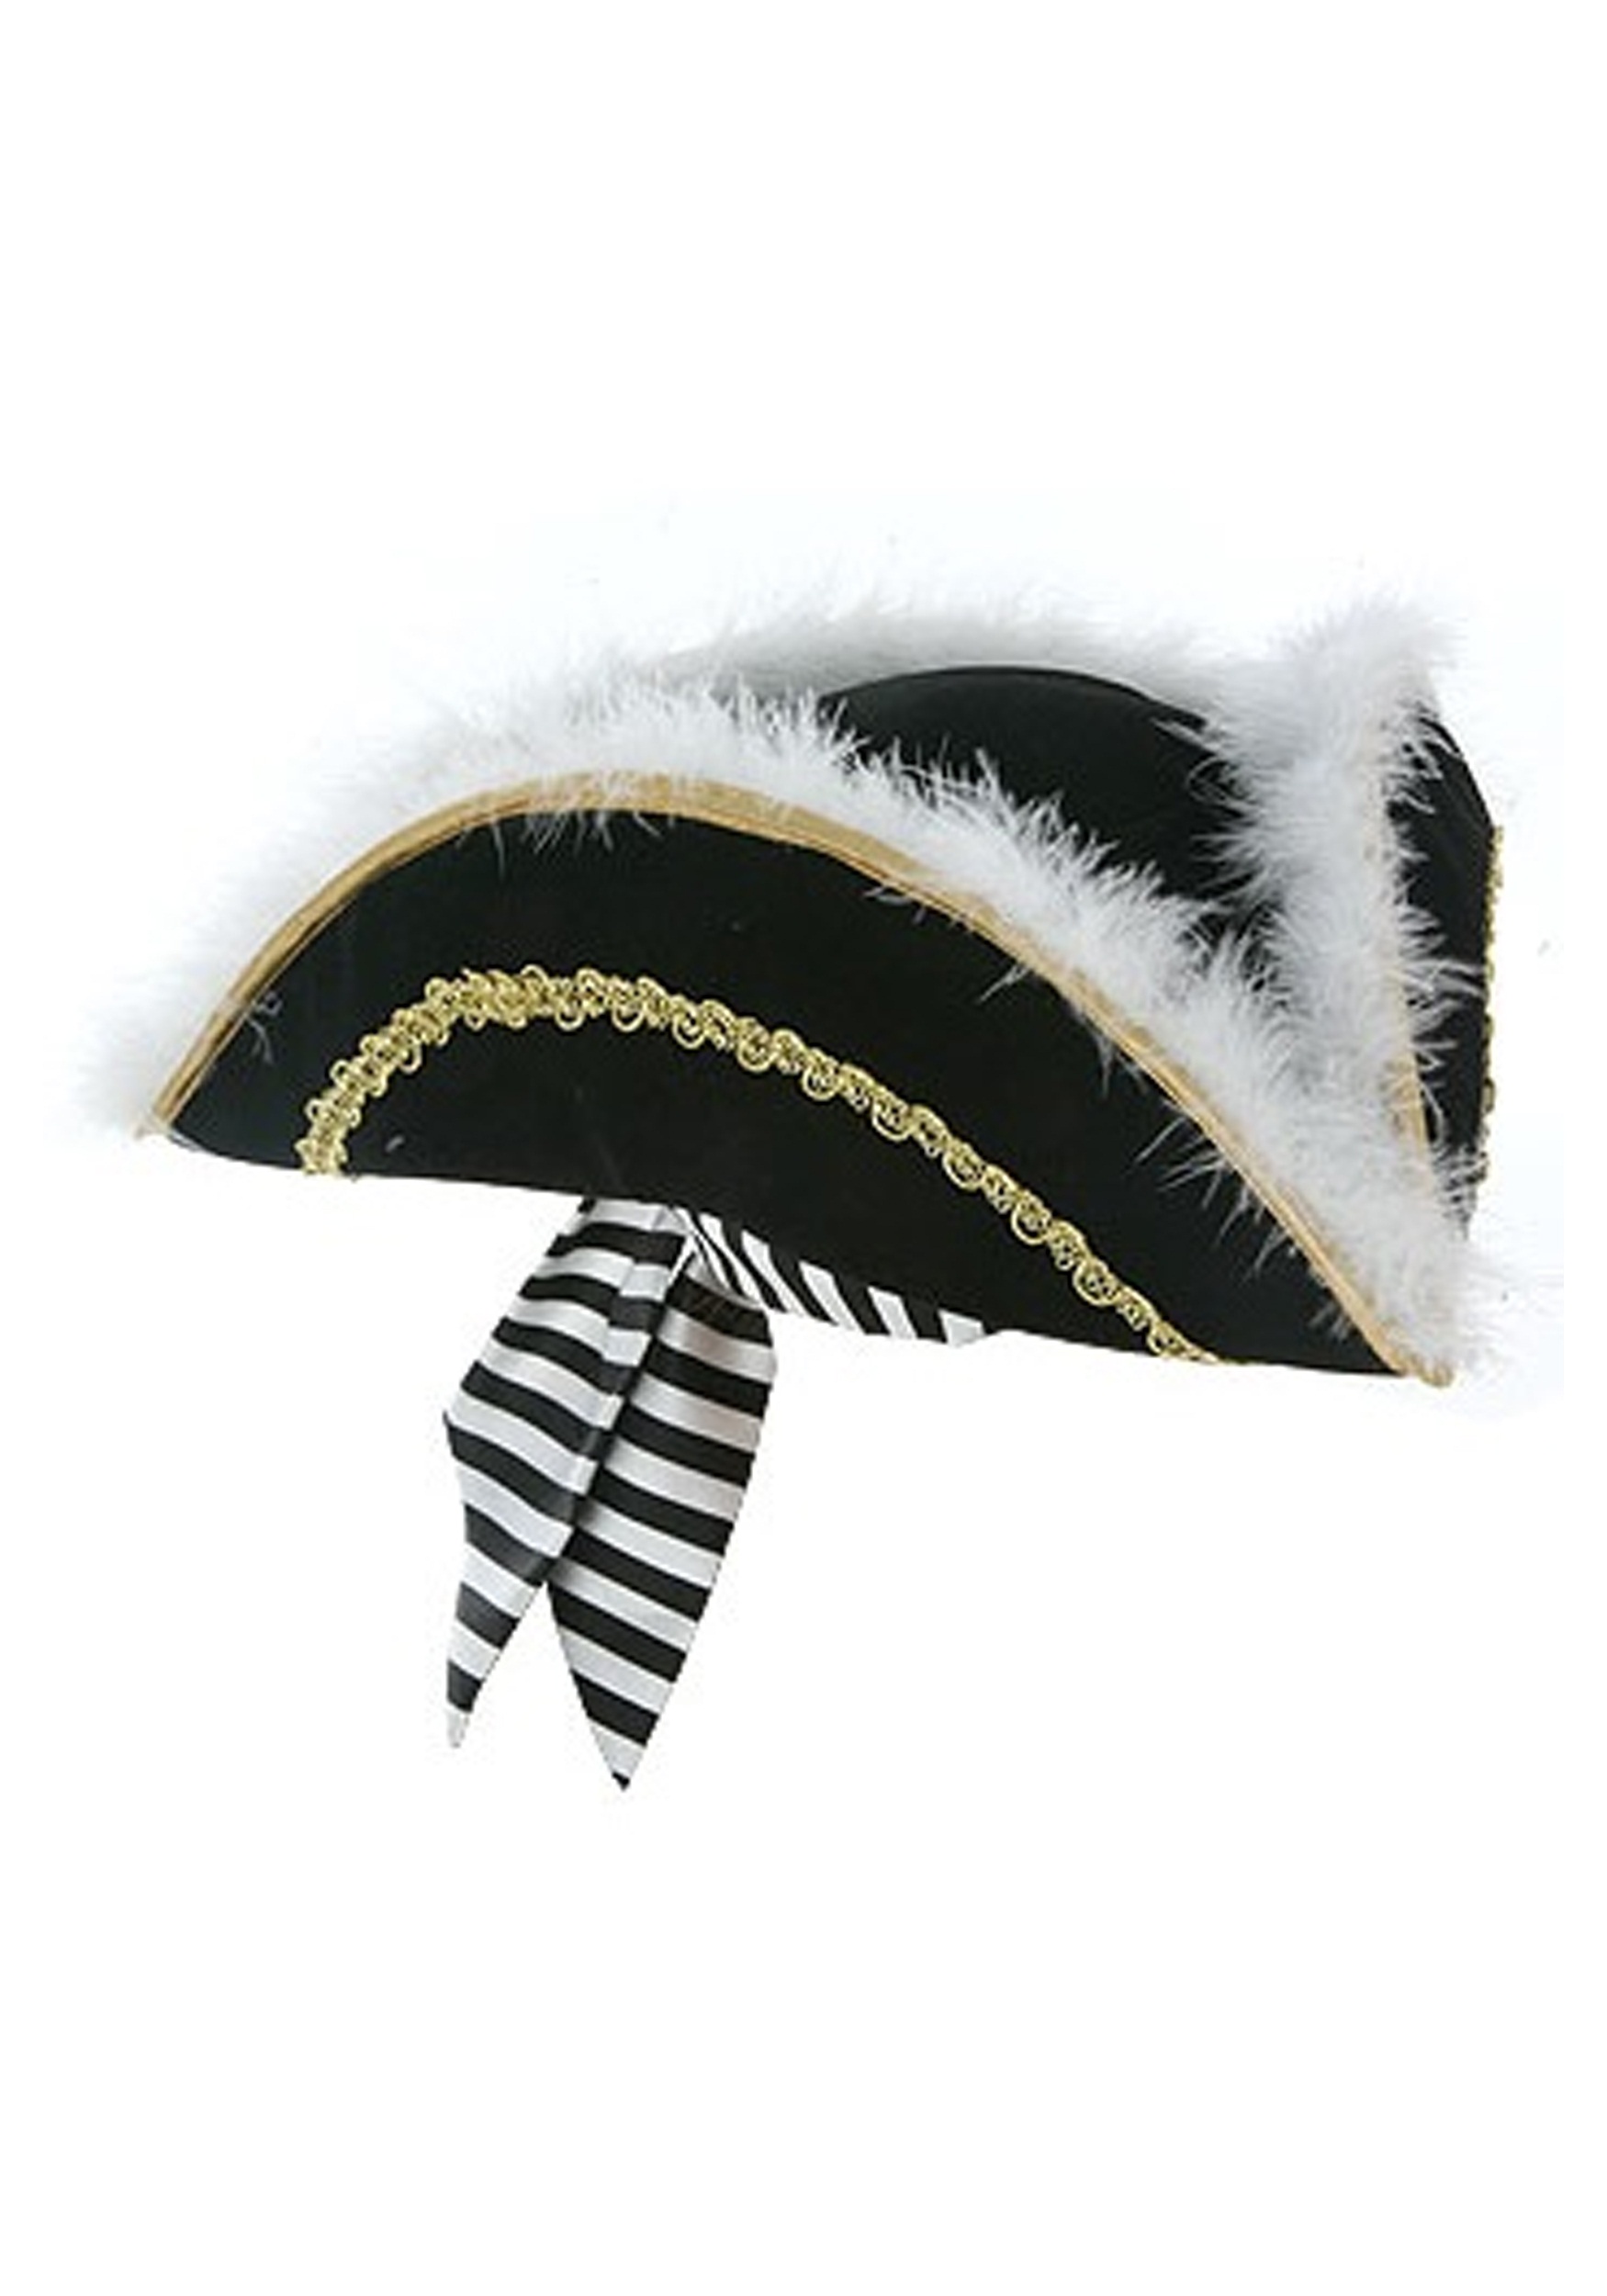 tricorn hat for sale uk